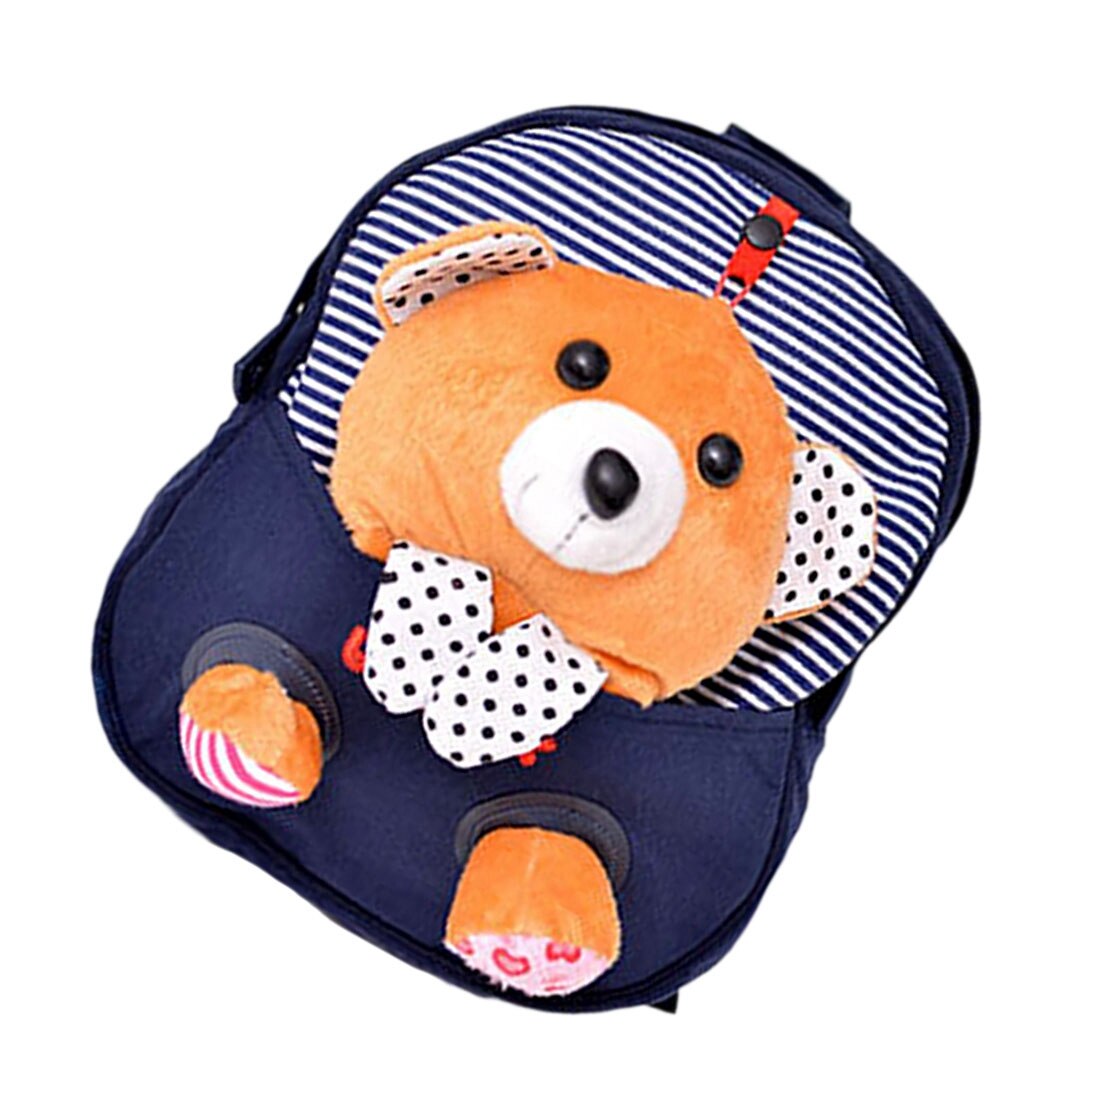 Hot Mini School Bags Backpacks Children Children's backpack Cartoon Bear Doll Printing Backpack For 2-6 Year Kids Blue - ebowsos